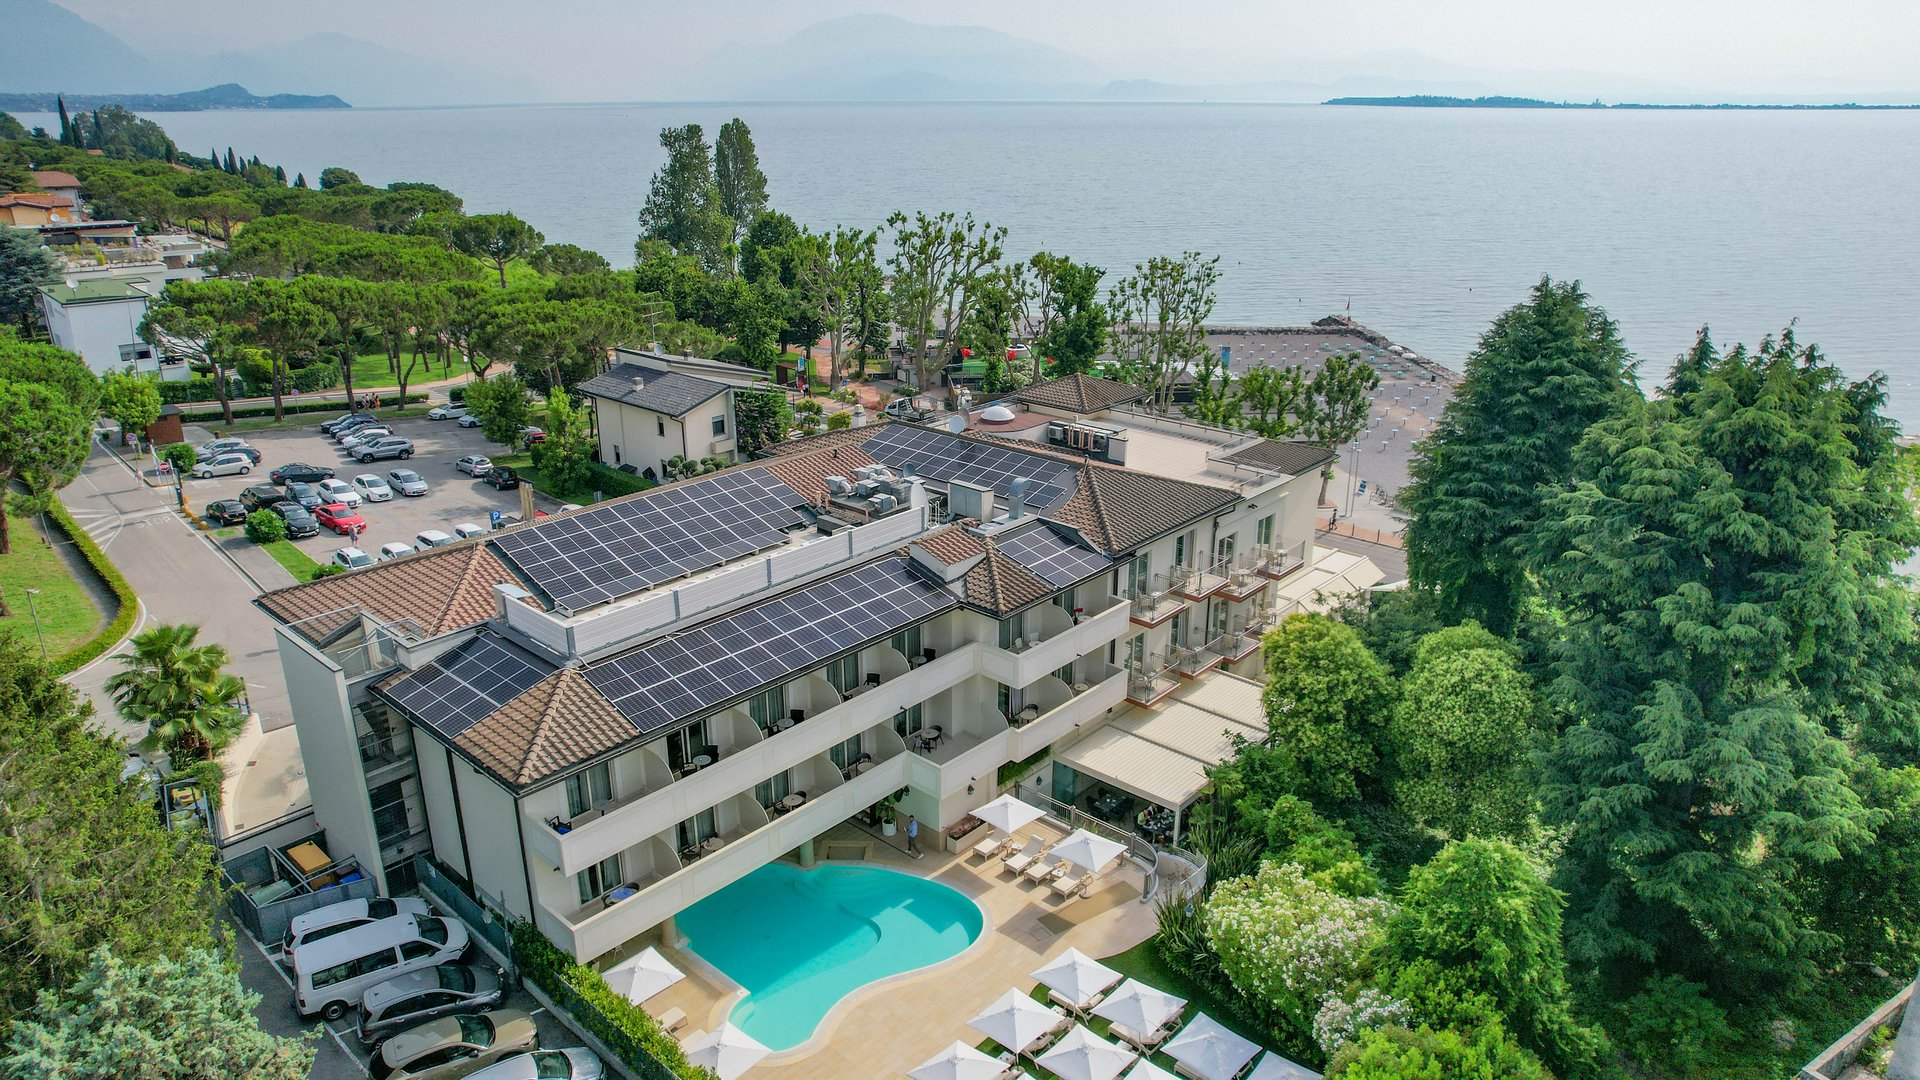 Hotel Villa Rosa a Desenzano: green and sustainable